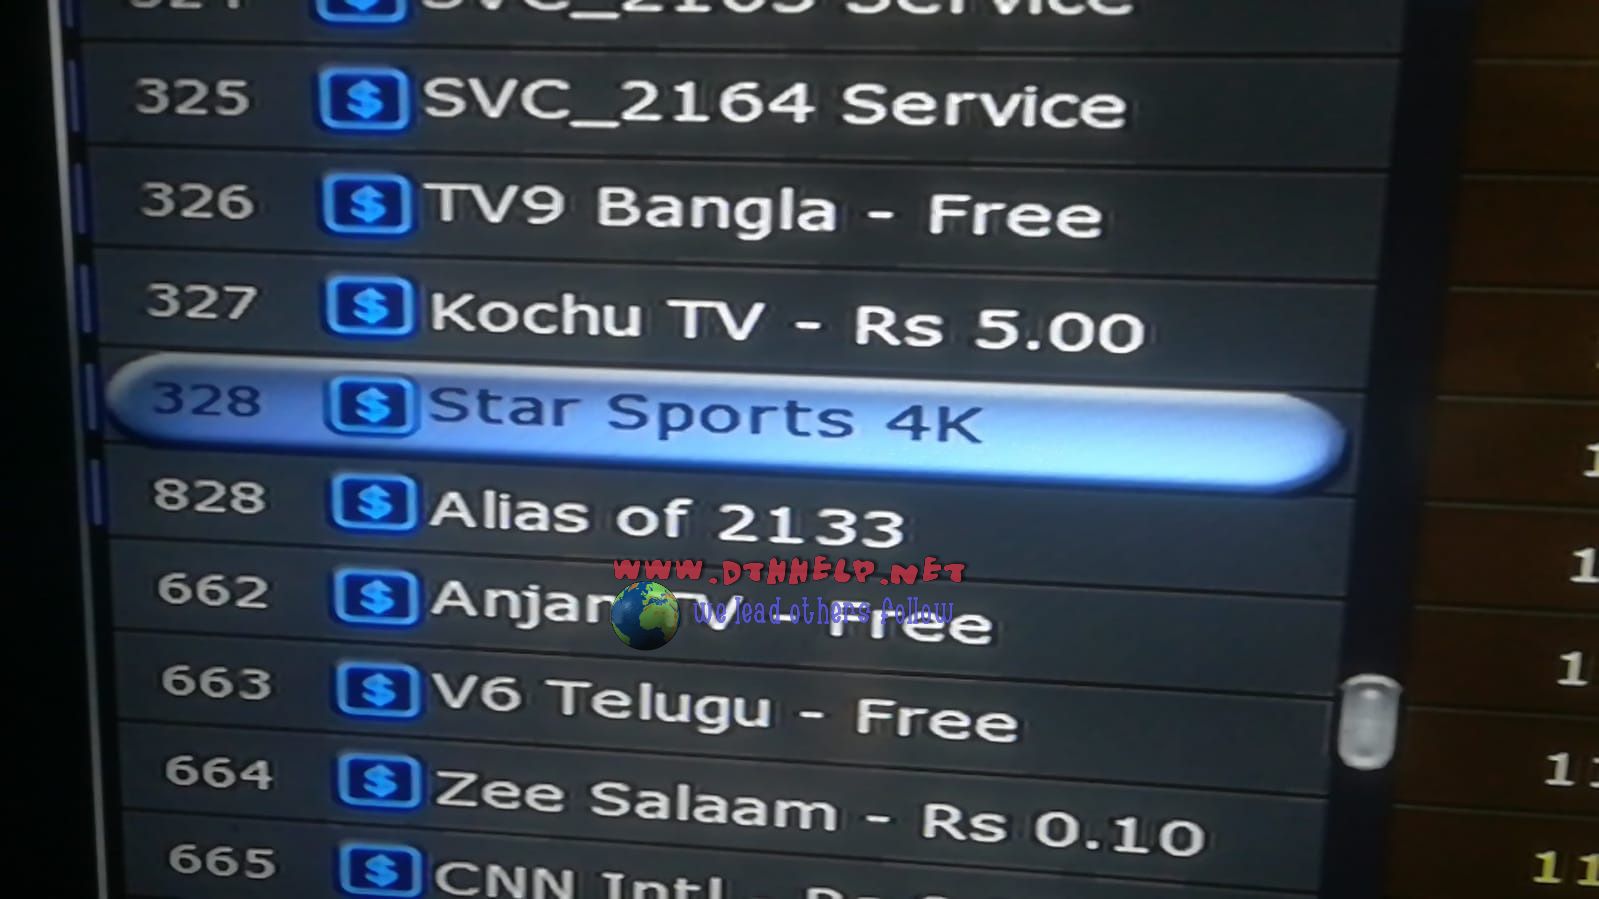 Star Sports 4K channel list